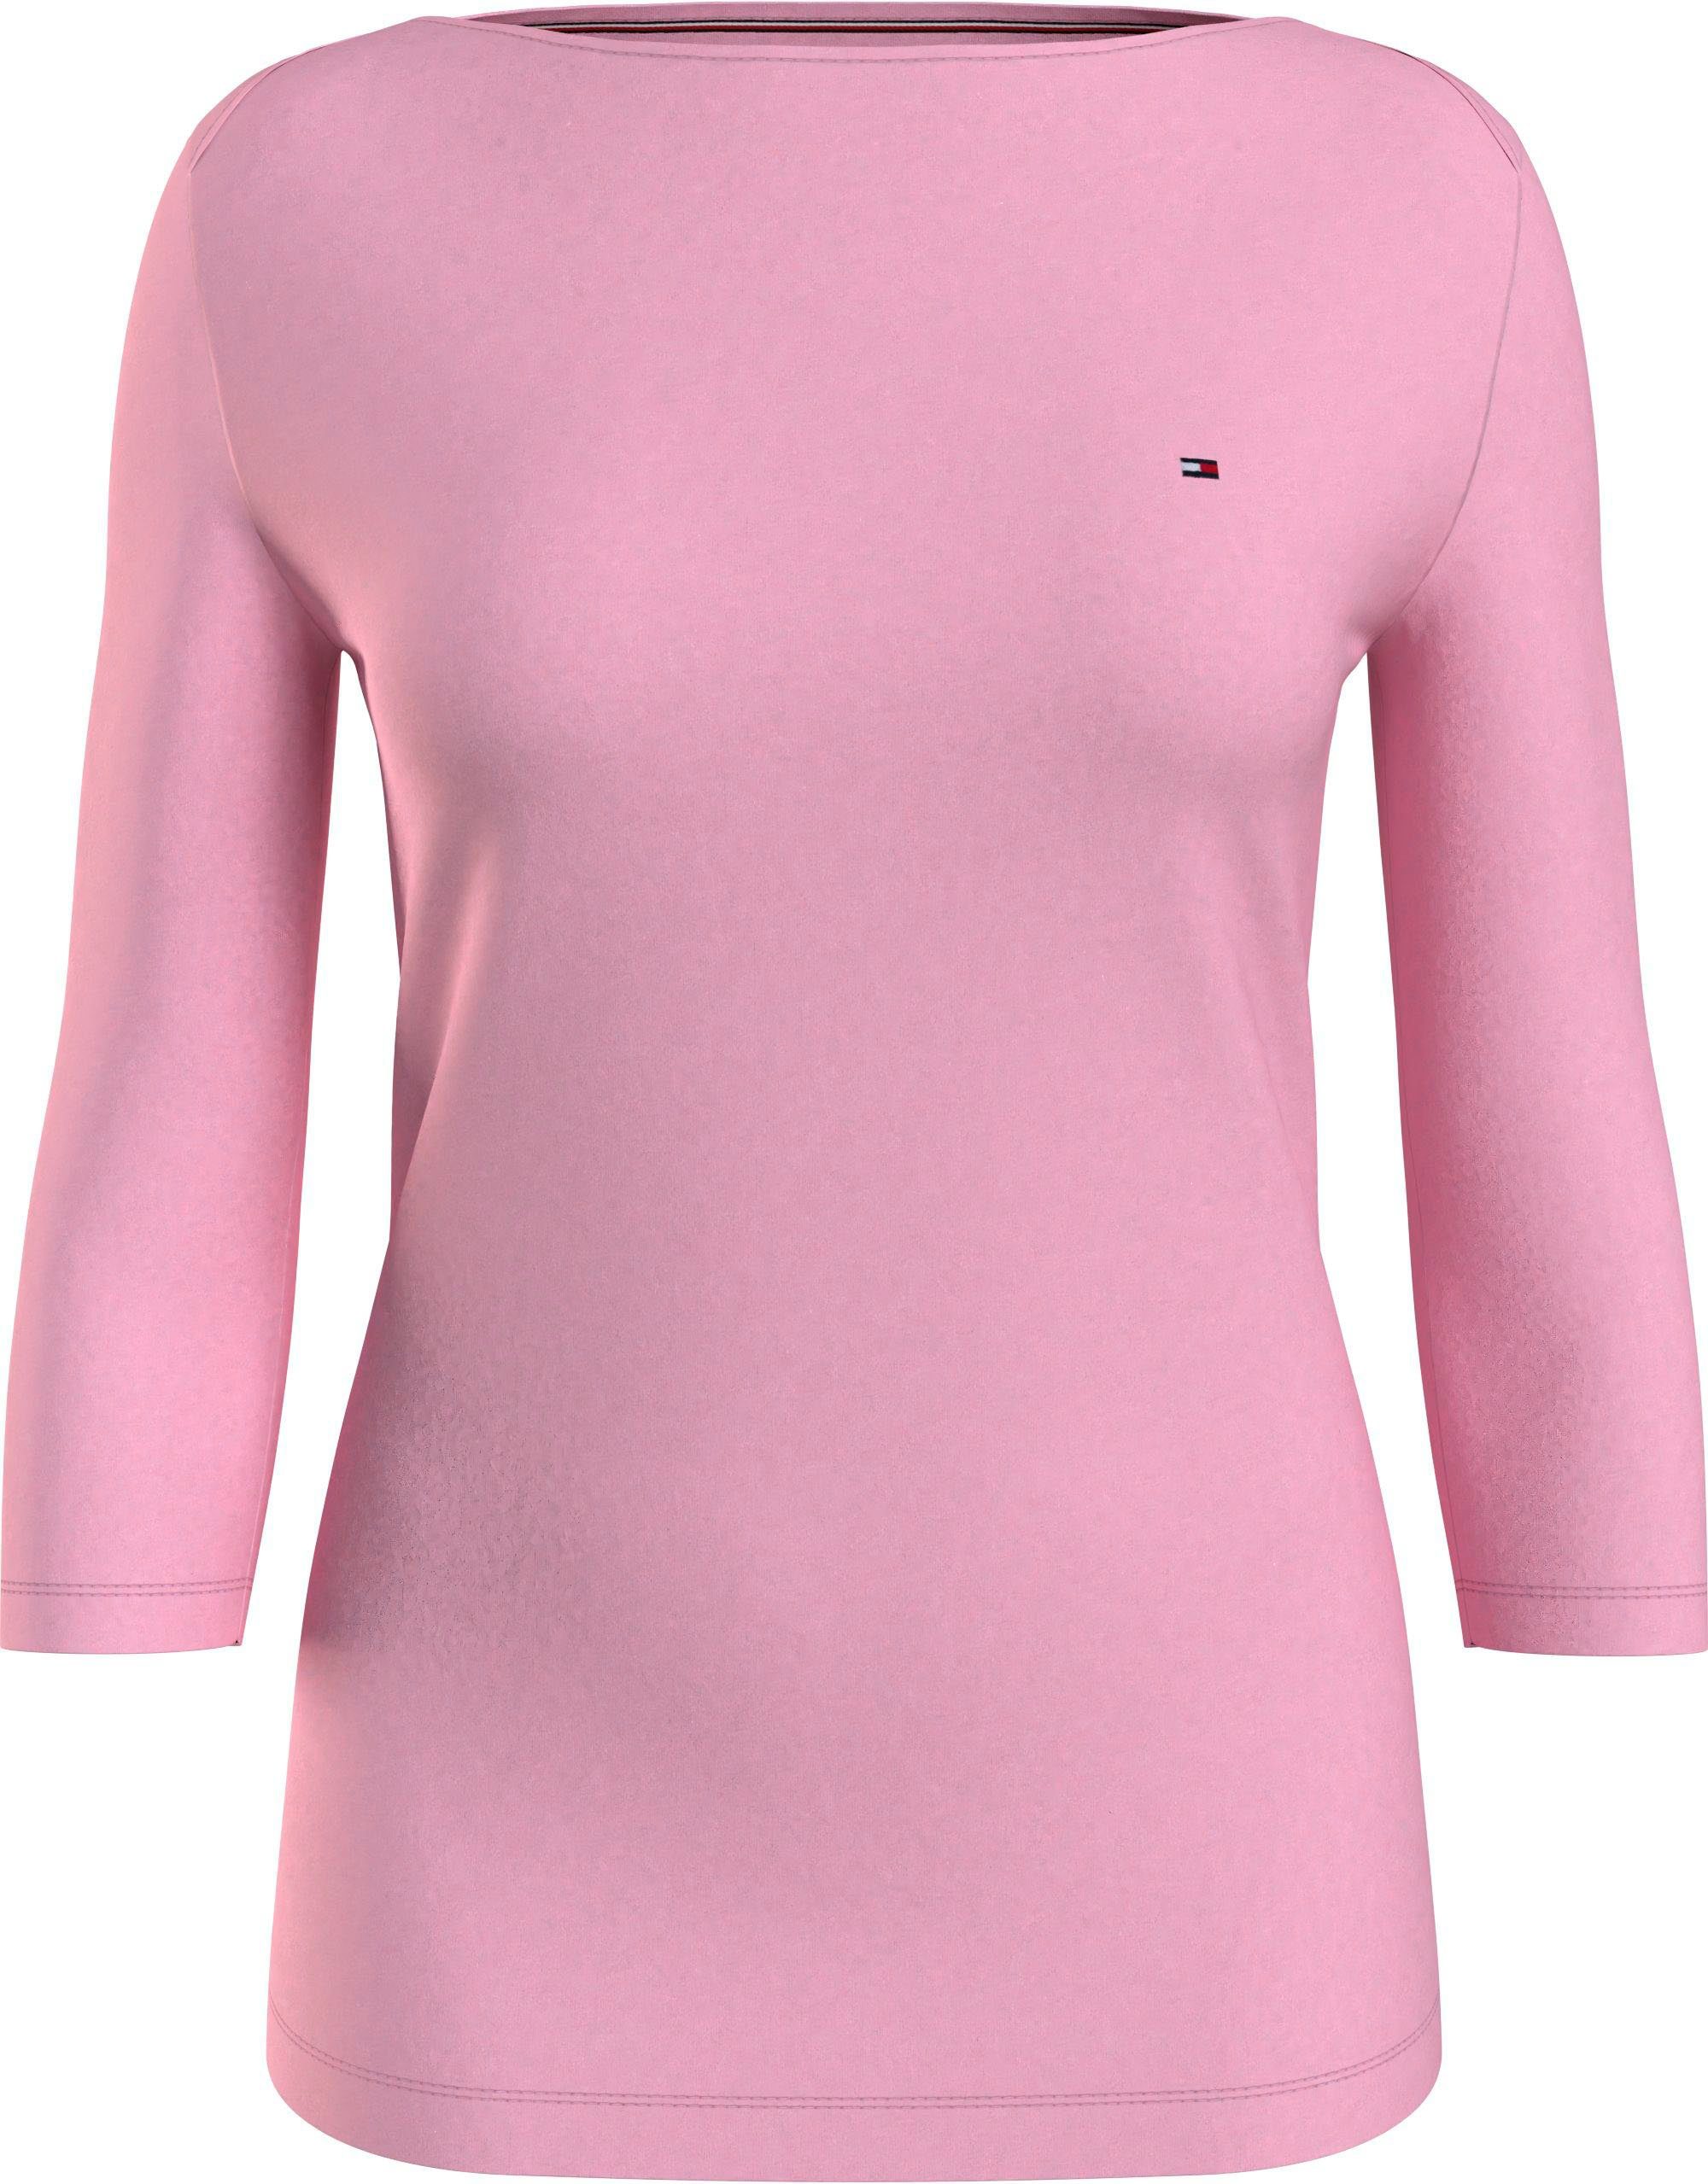 CO ORG BOAT-NK pink mit SLIM TOP SLV Hilfiger Tommy Tommy-Hilfiger-Logostickerei 3/4-Arm-Shirt 3/4